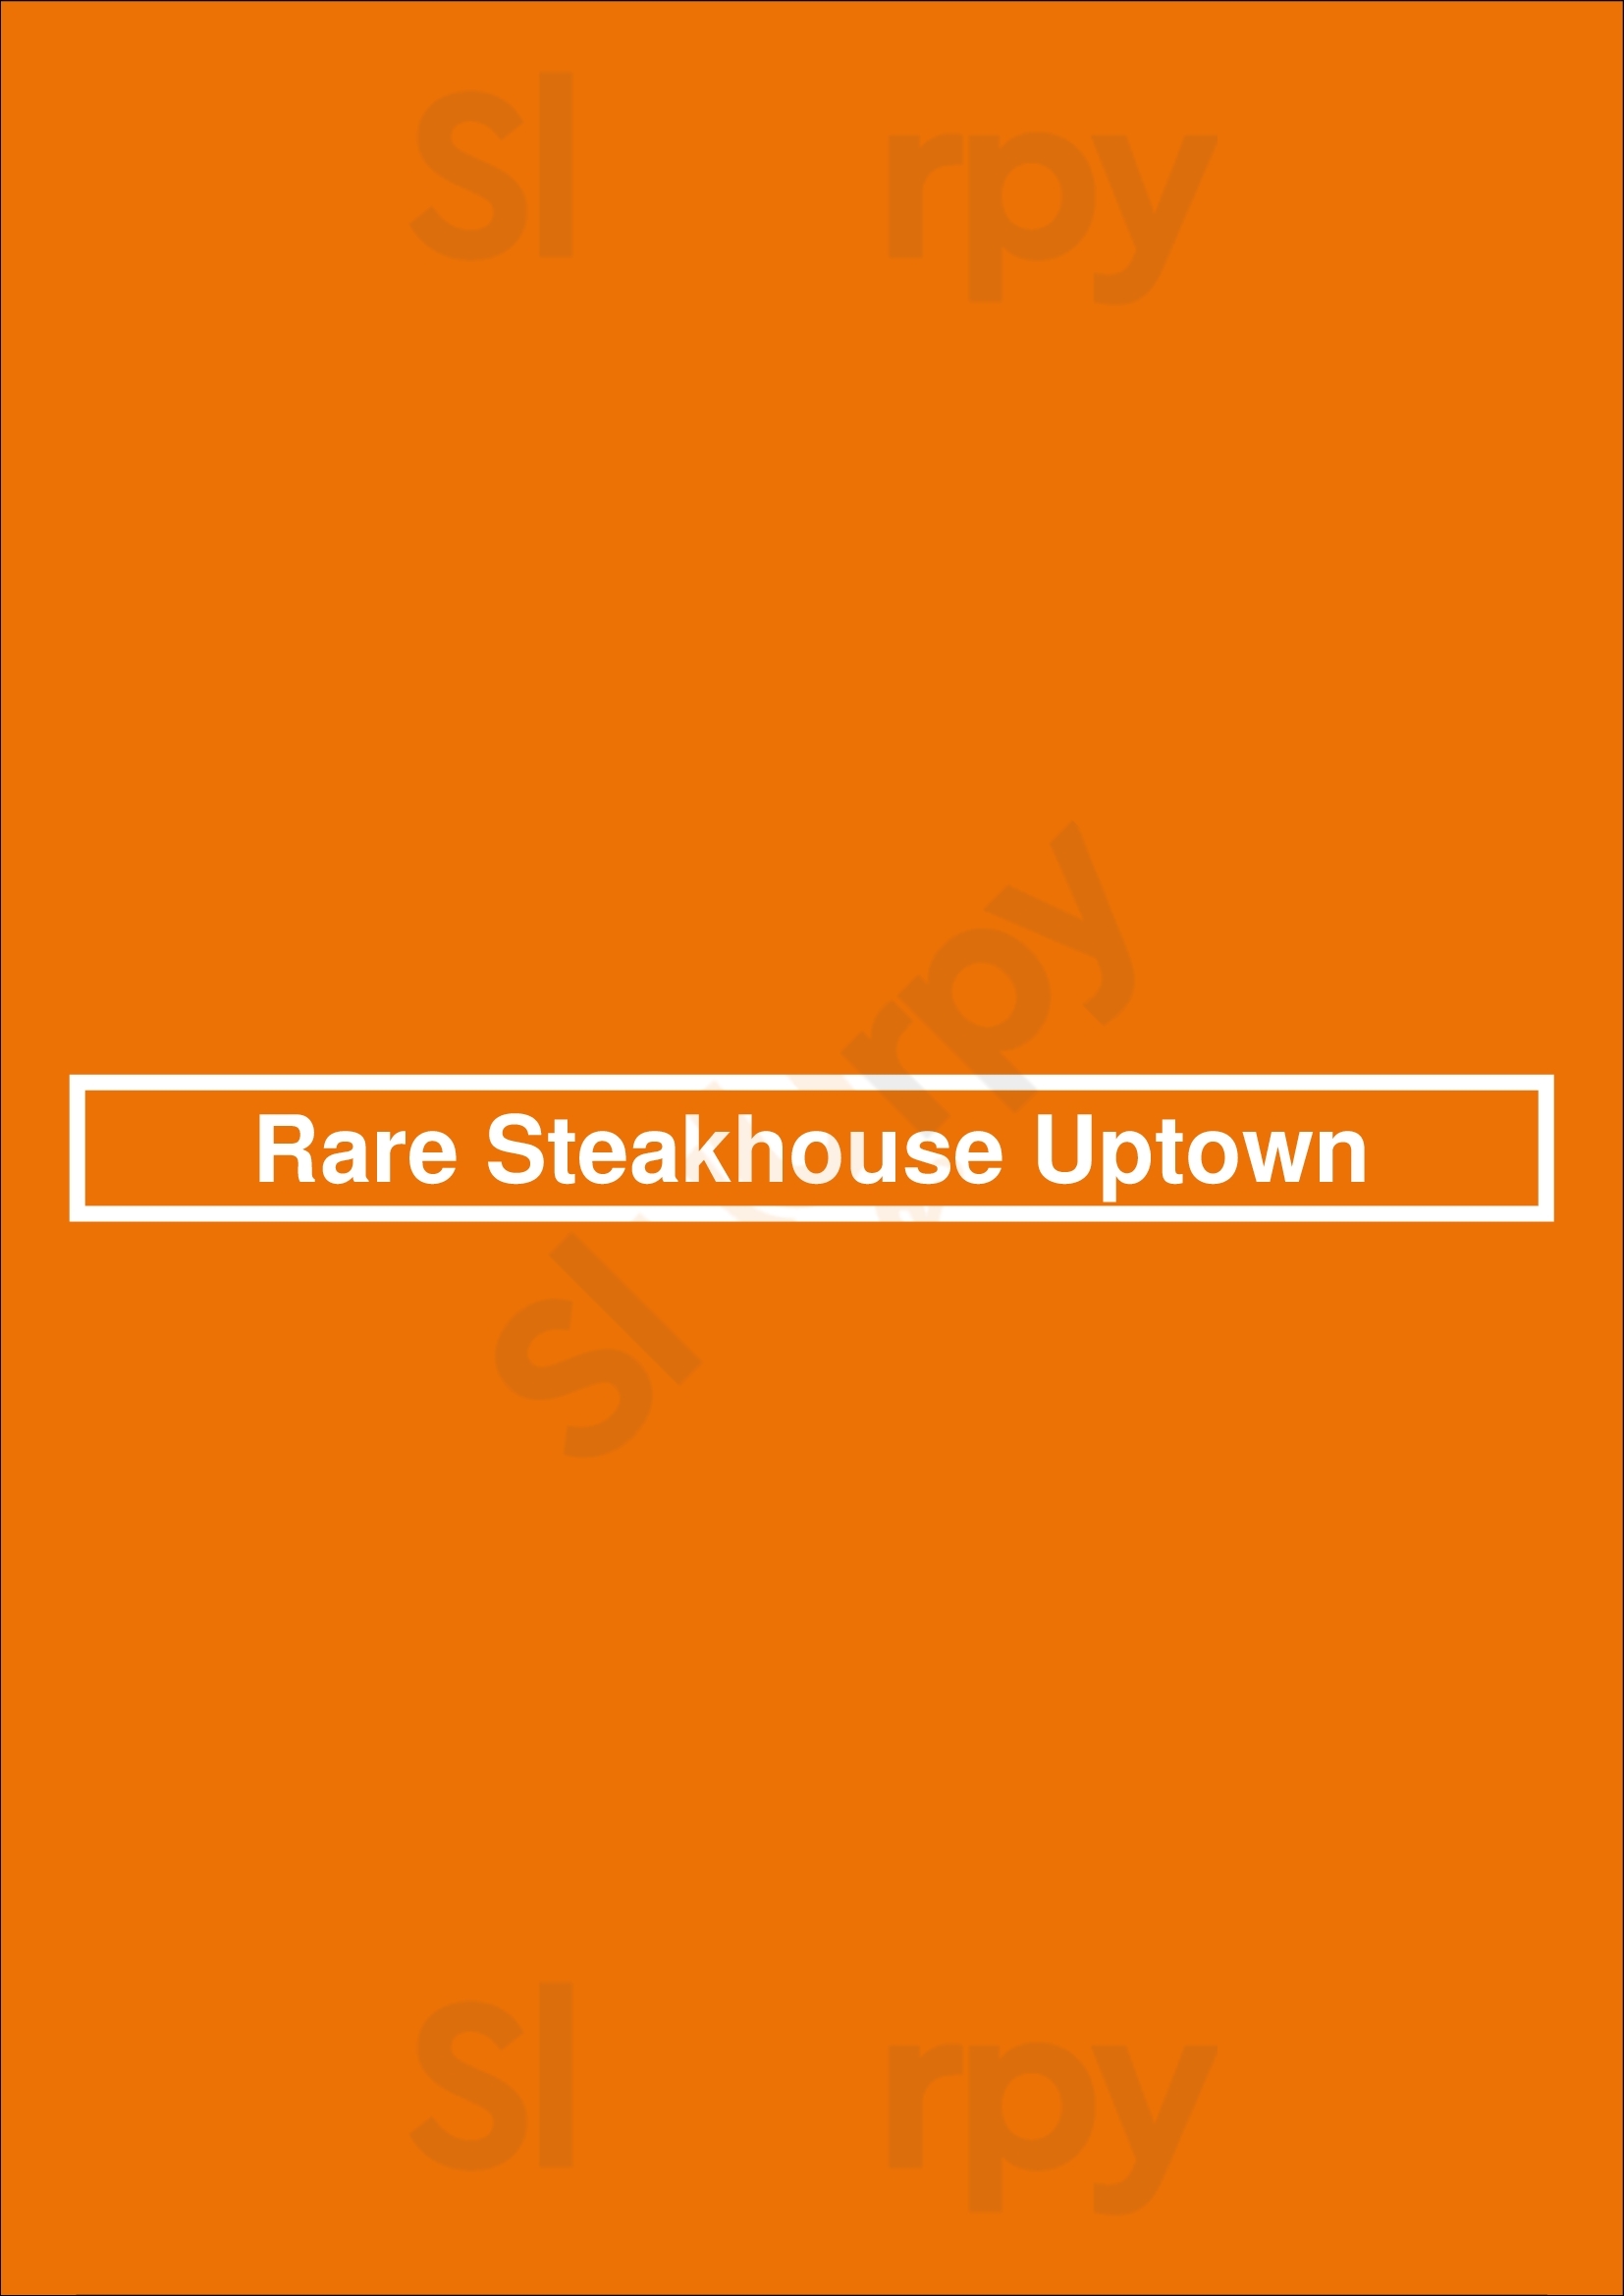 Rare Steakhouse Uptown Melbourne Menu - 1